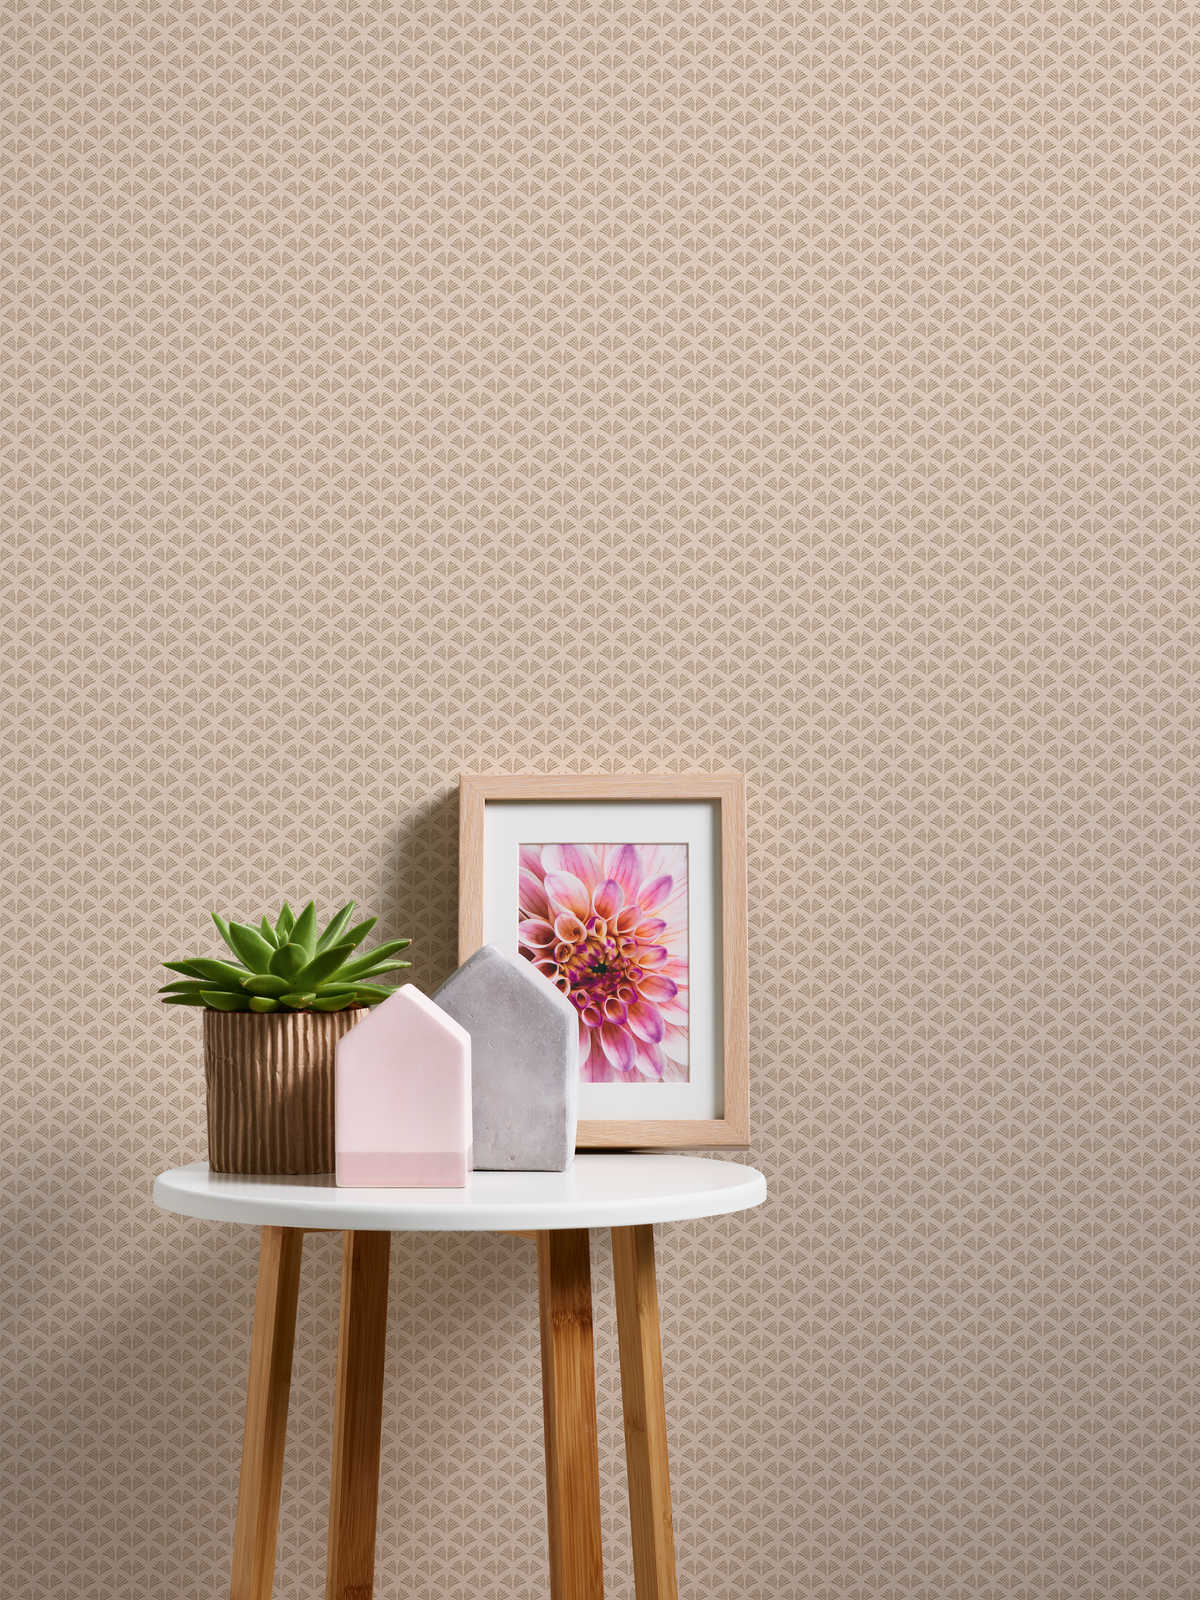             Pattern wallpaper with metallic design & texture effect - cream, metallic, pink
        